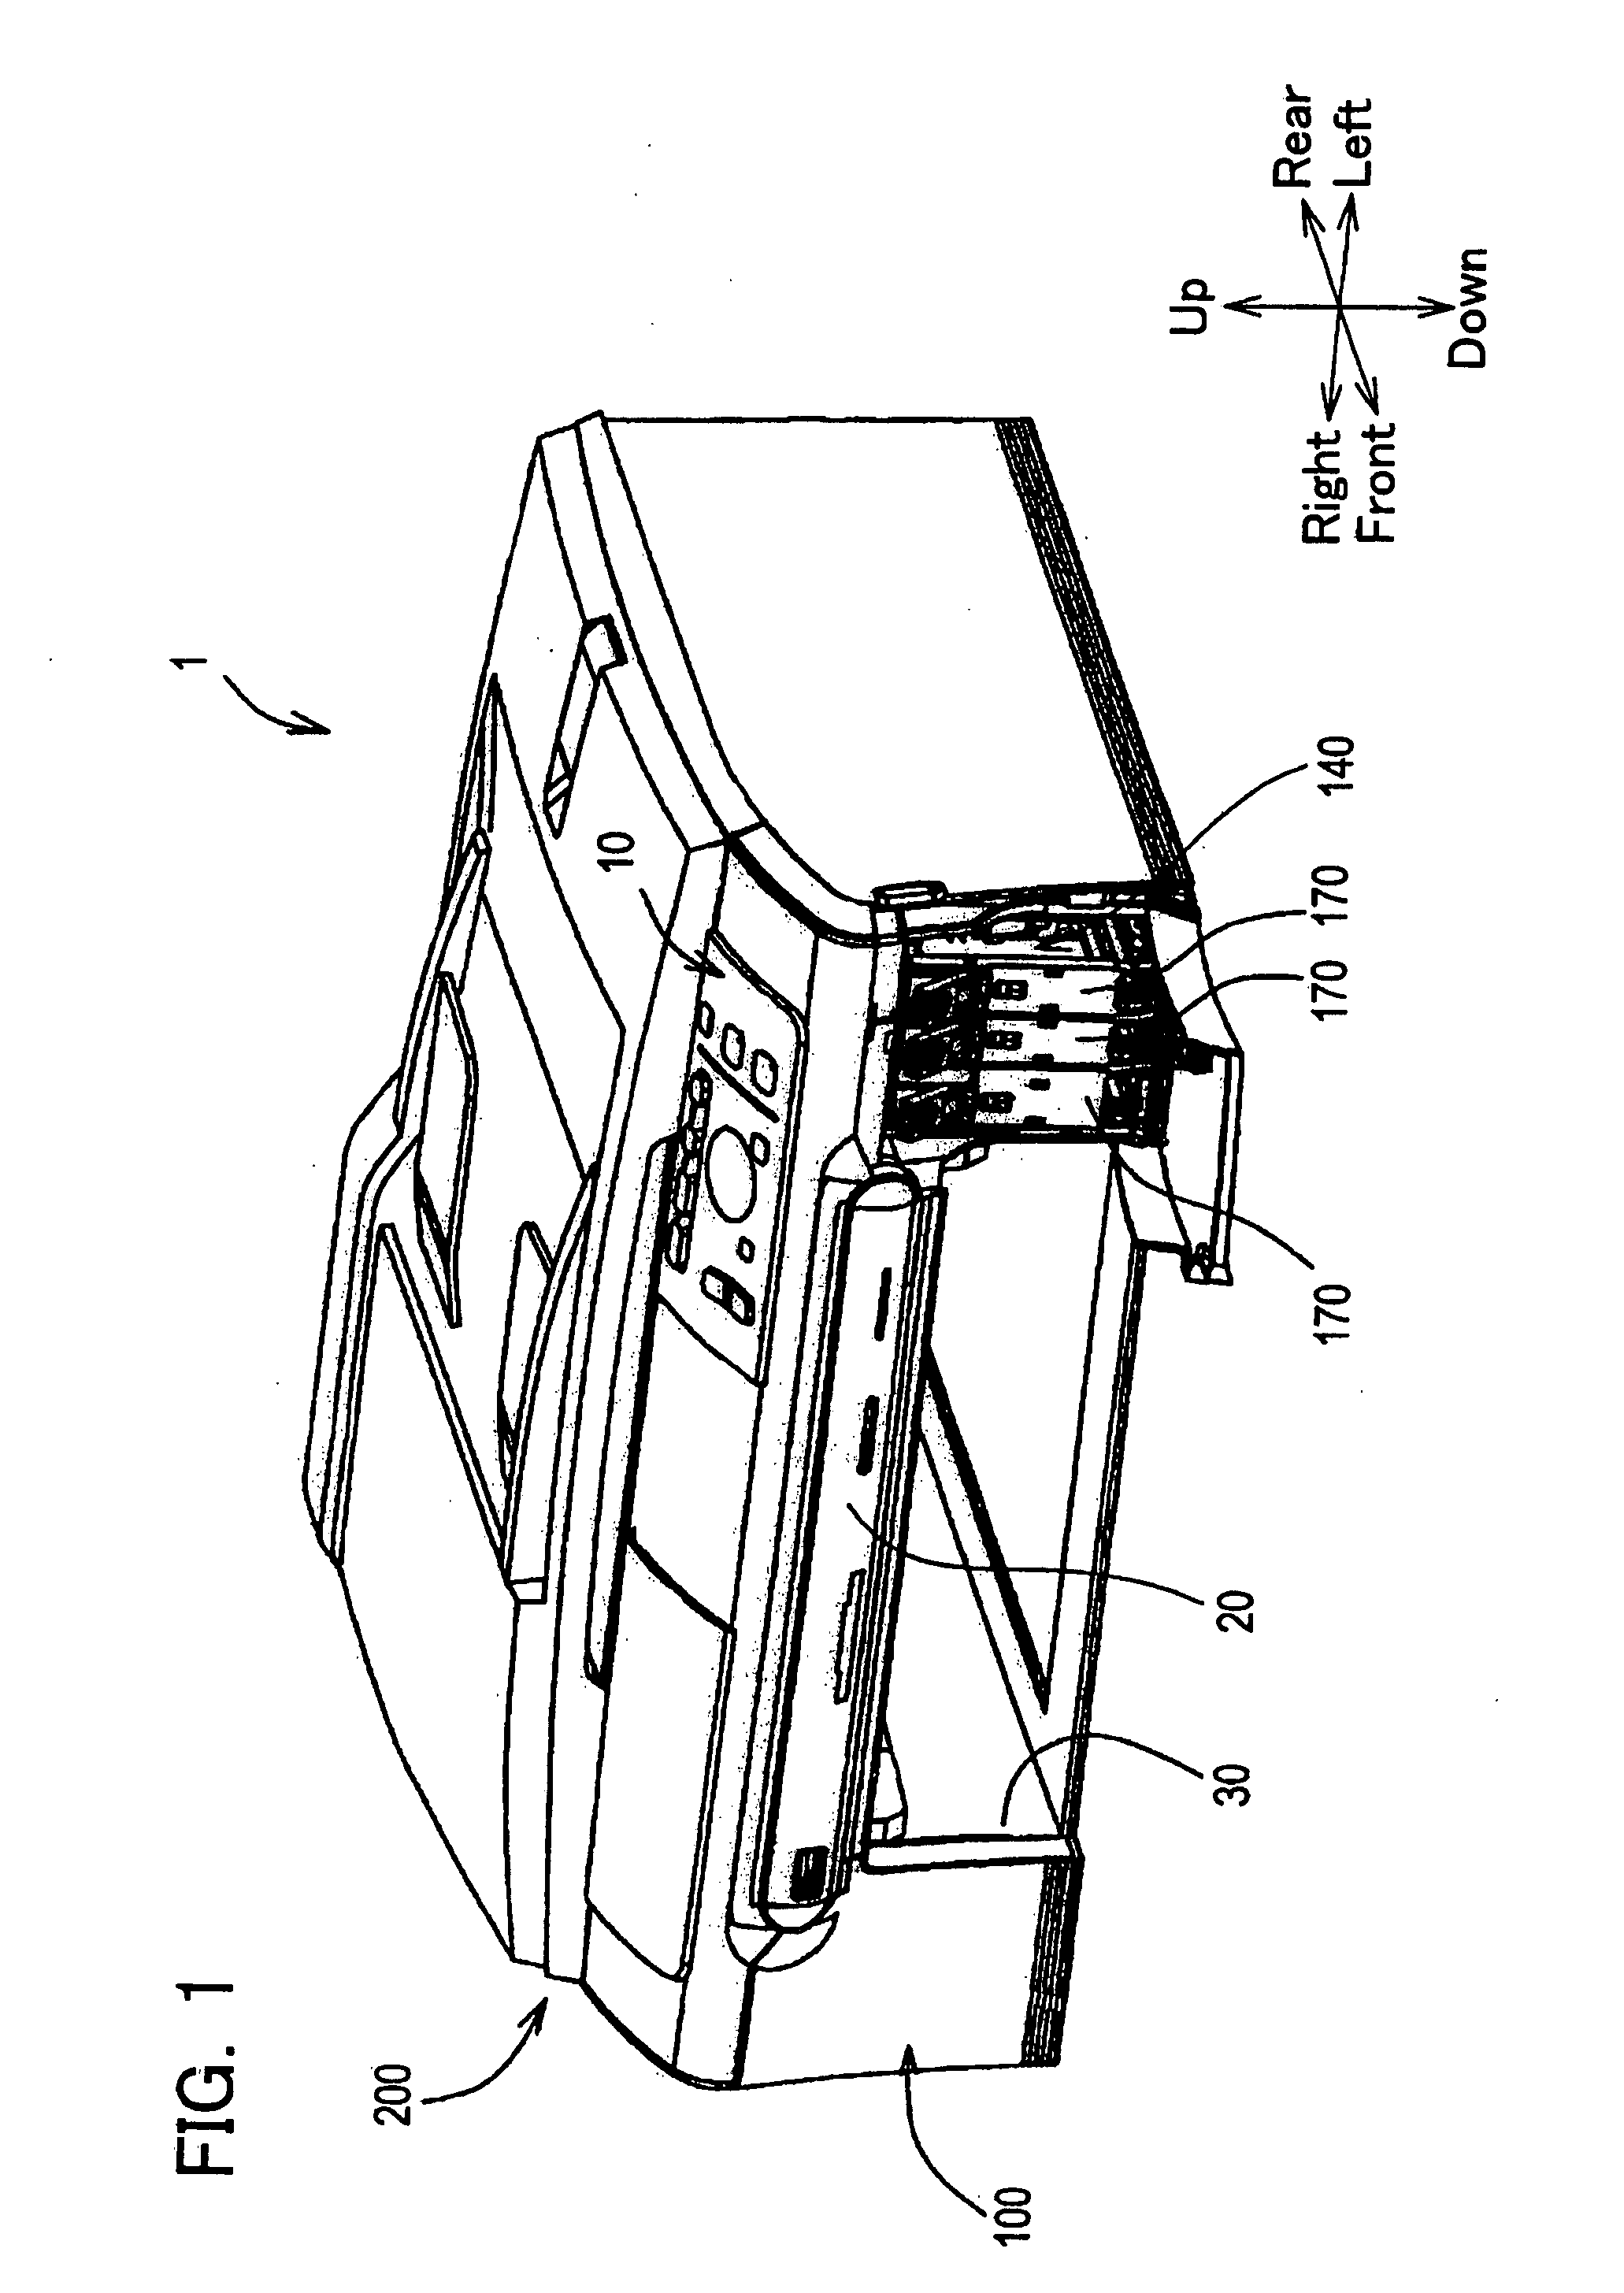 Droplet discharging device and ink jet printer